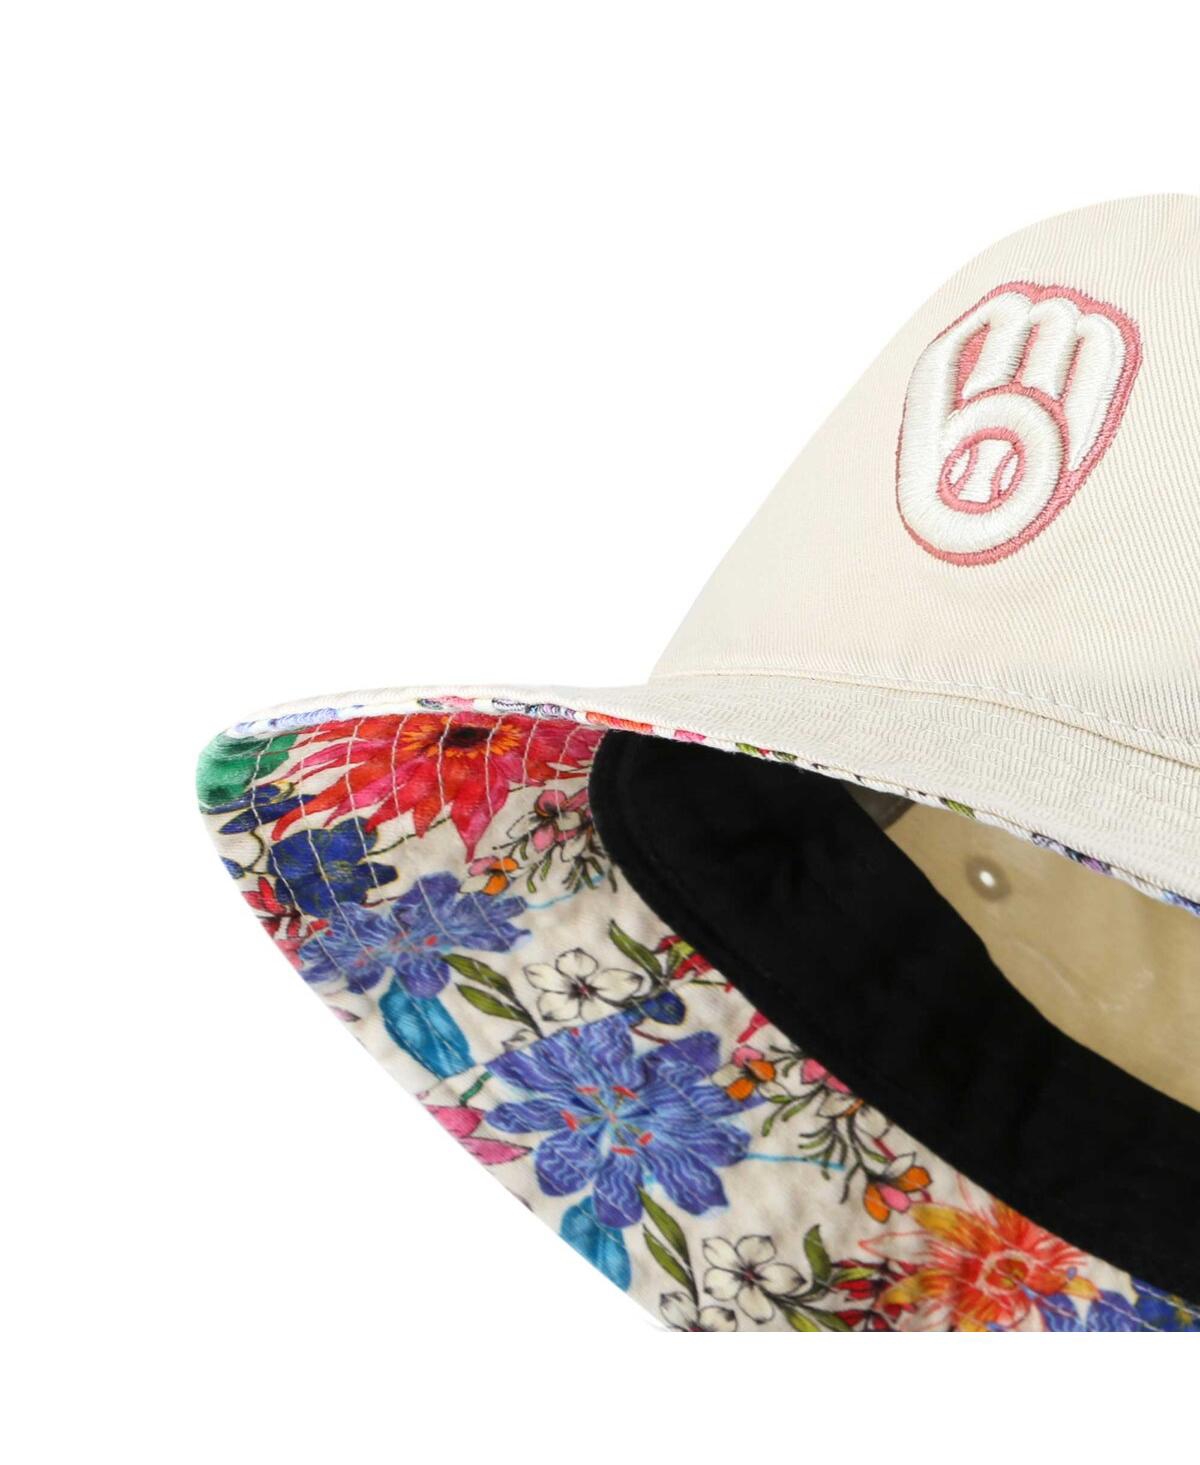 Shop 47 Brand Women's ' Natural Milwaukee Brewers Pollinator Bucket Hat